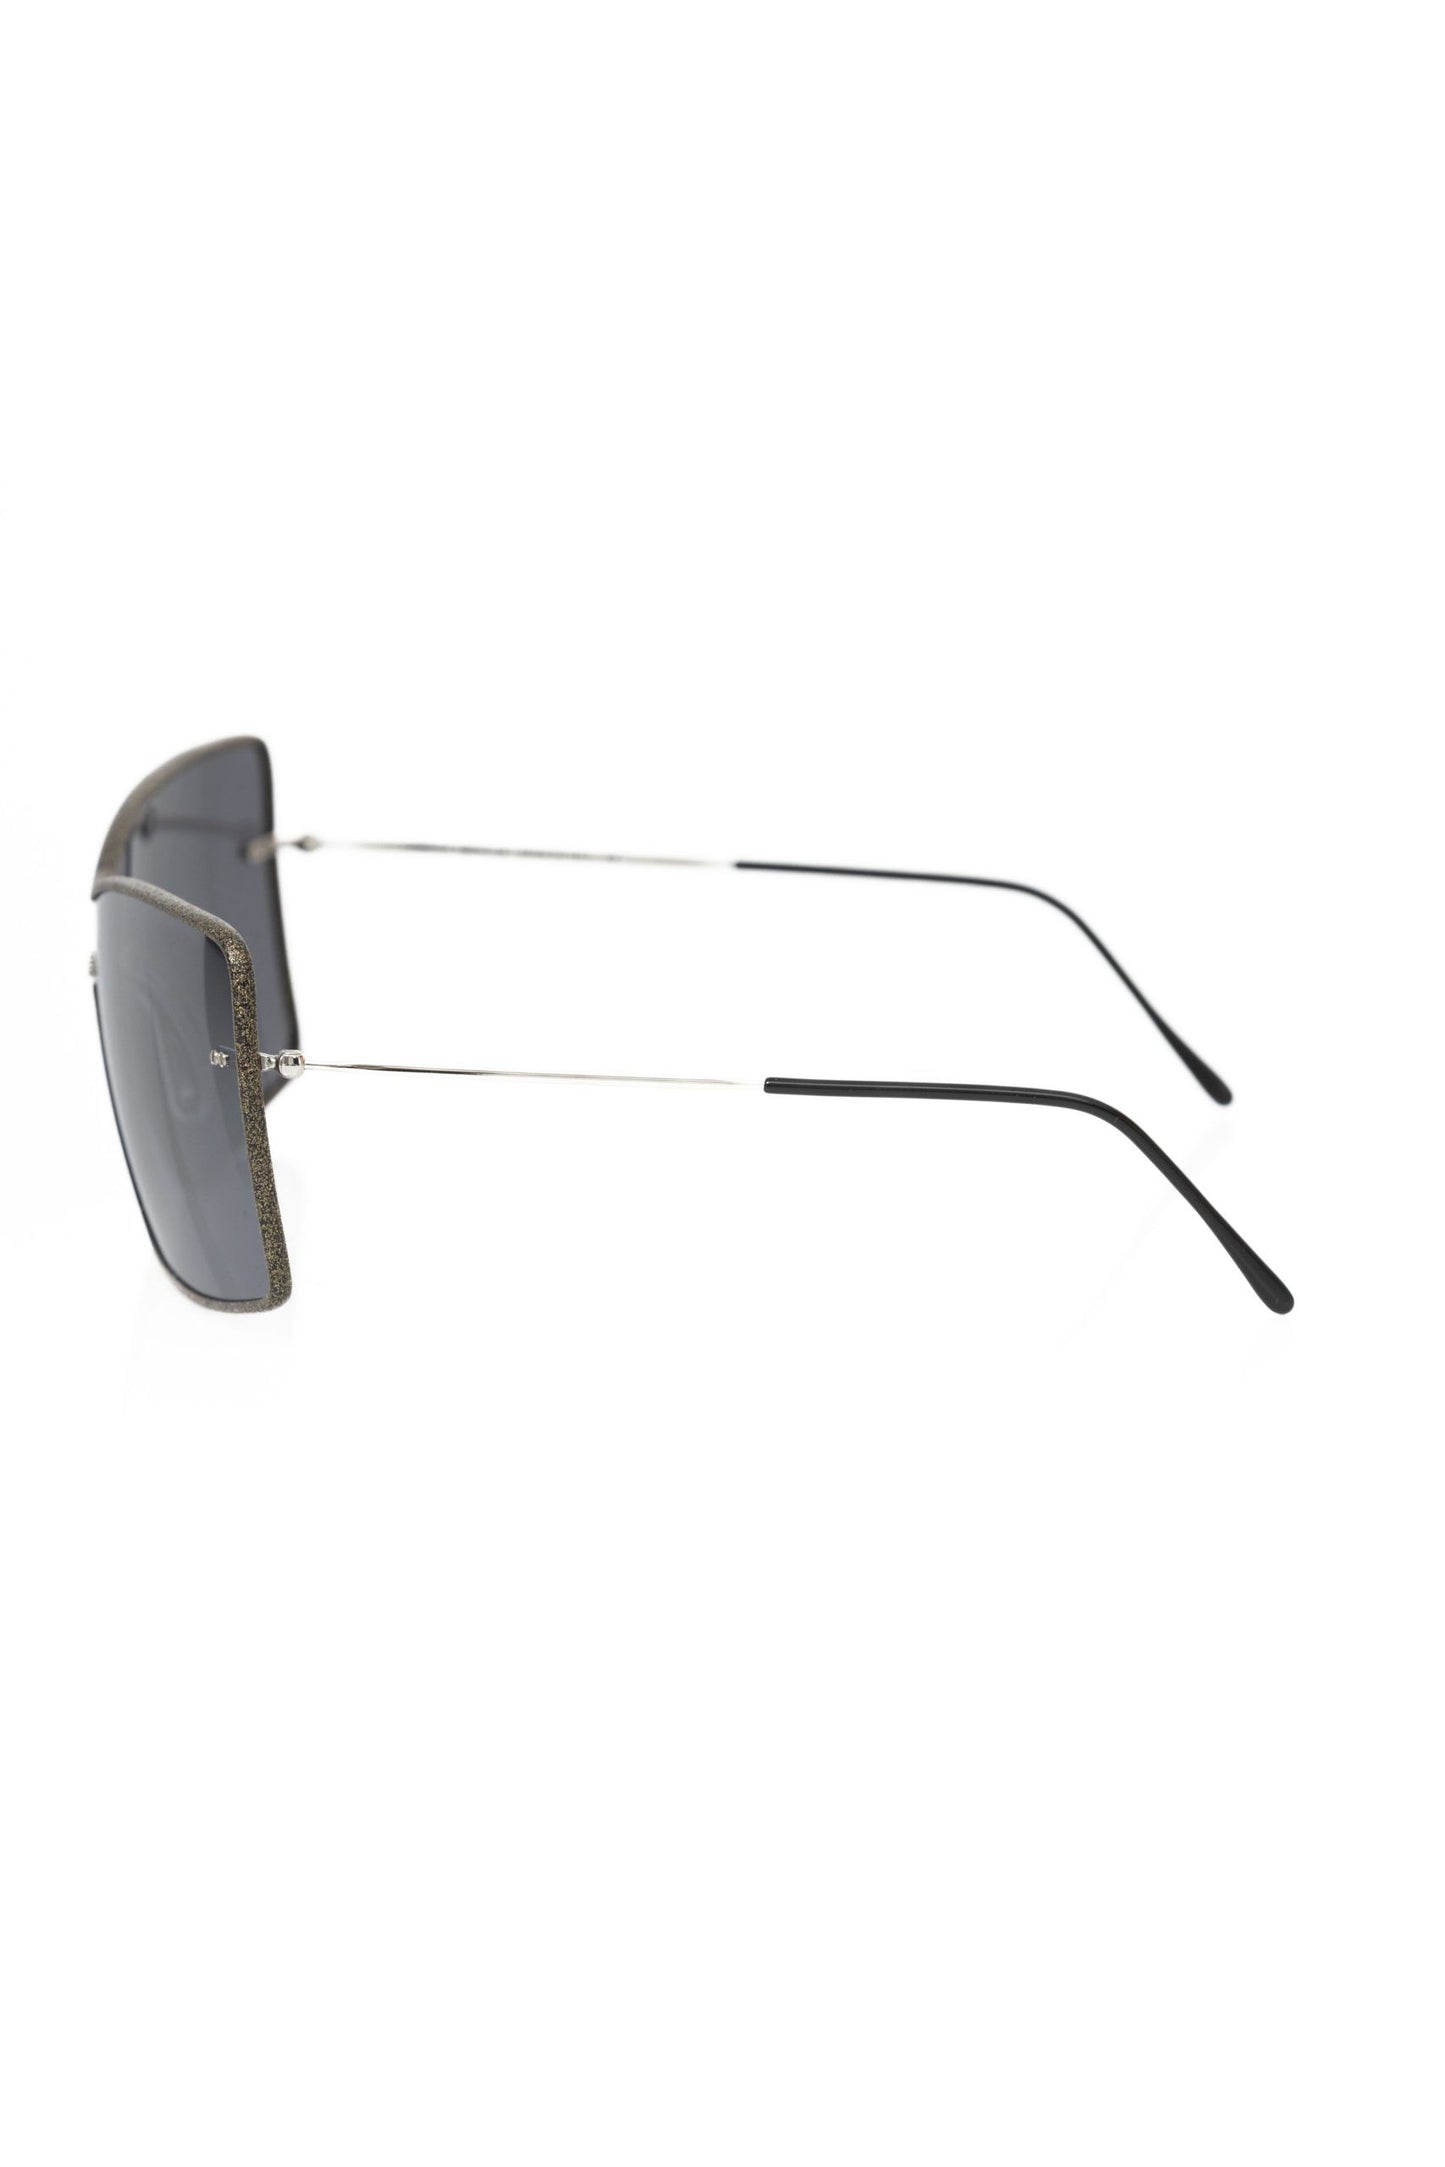 Frankie Morello Elegant Shield Sunglasses with Gray Mirror Lens